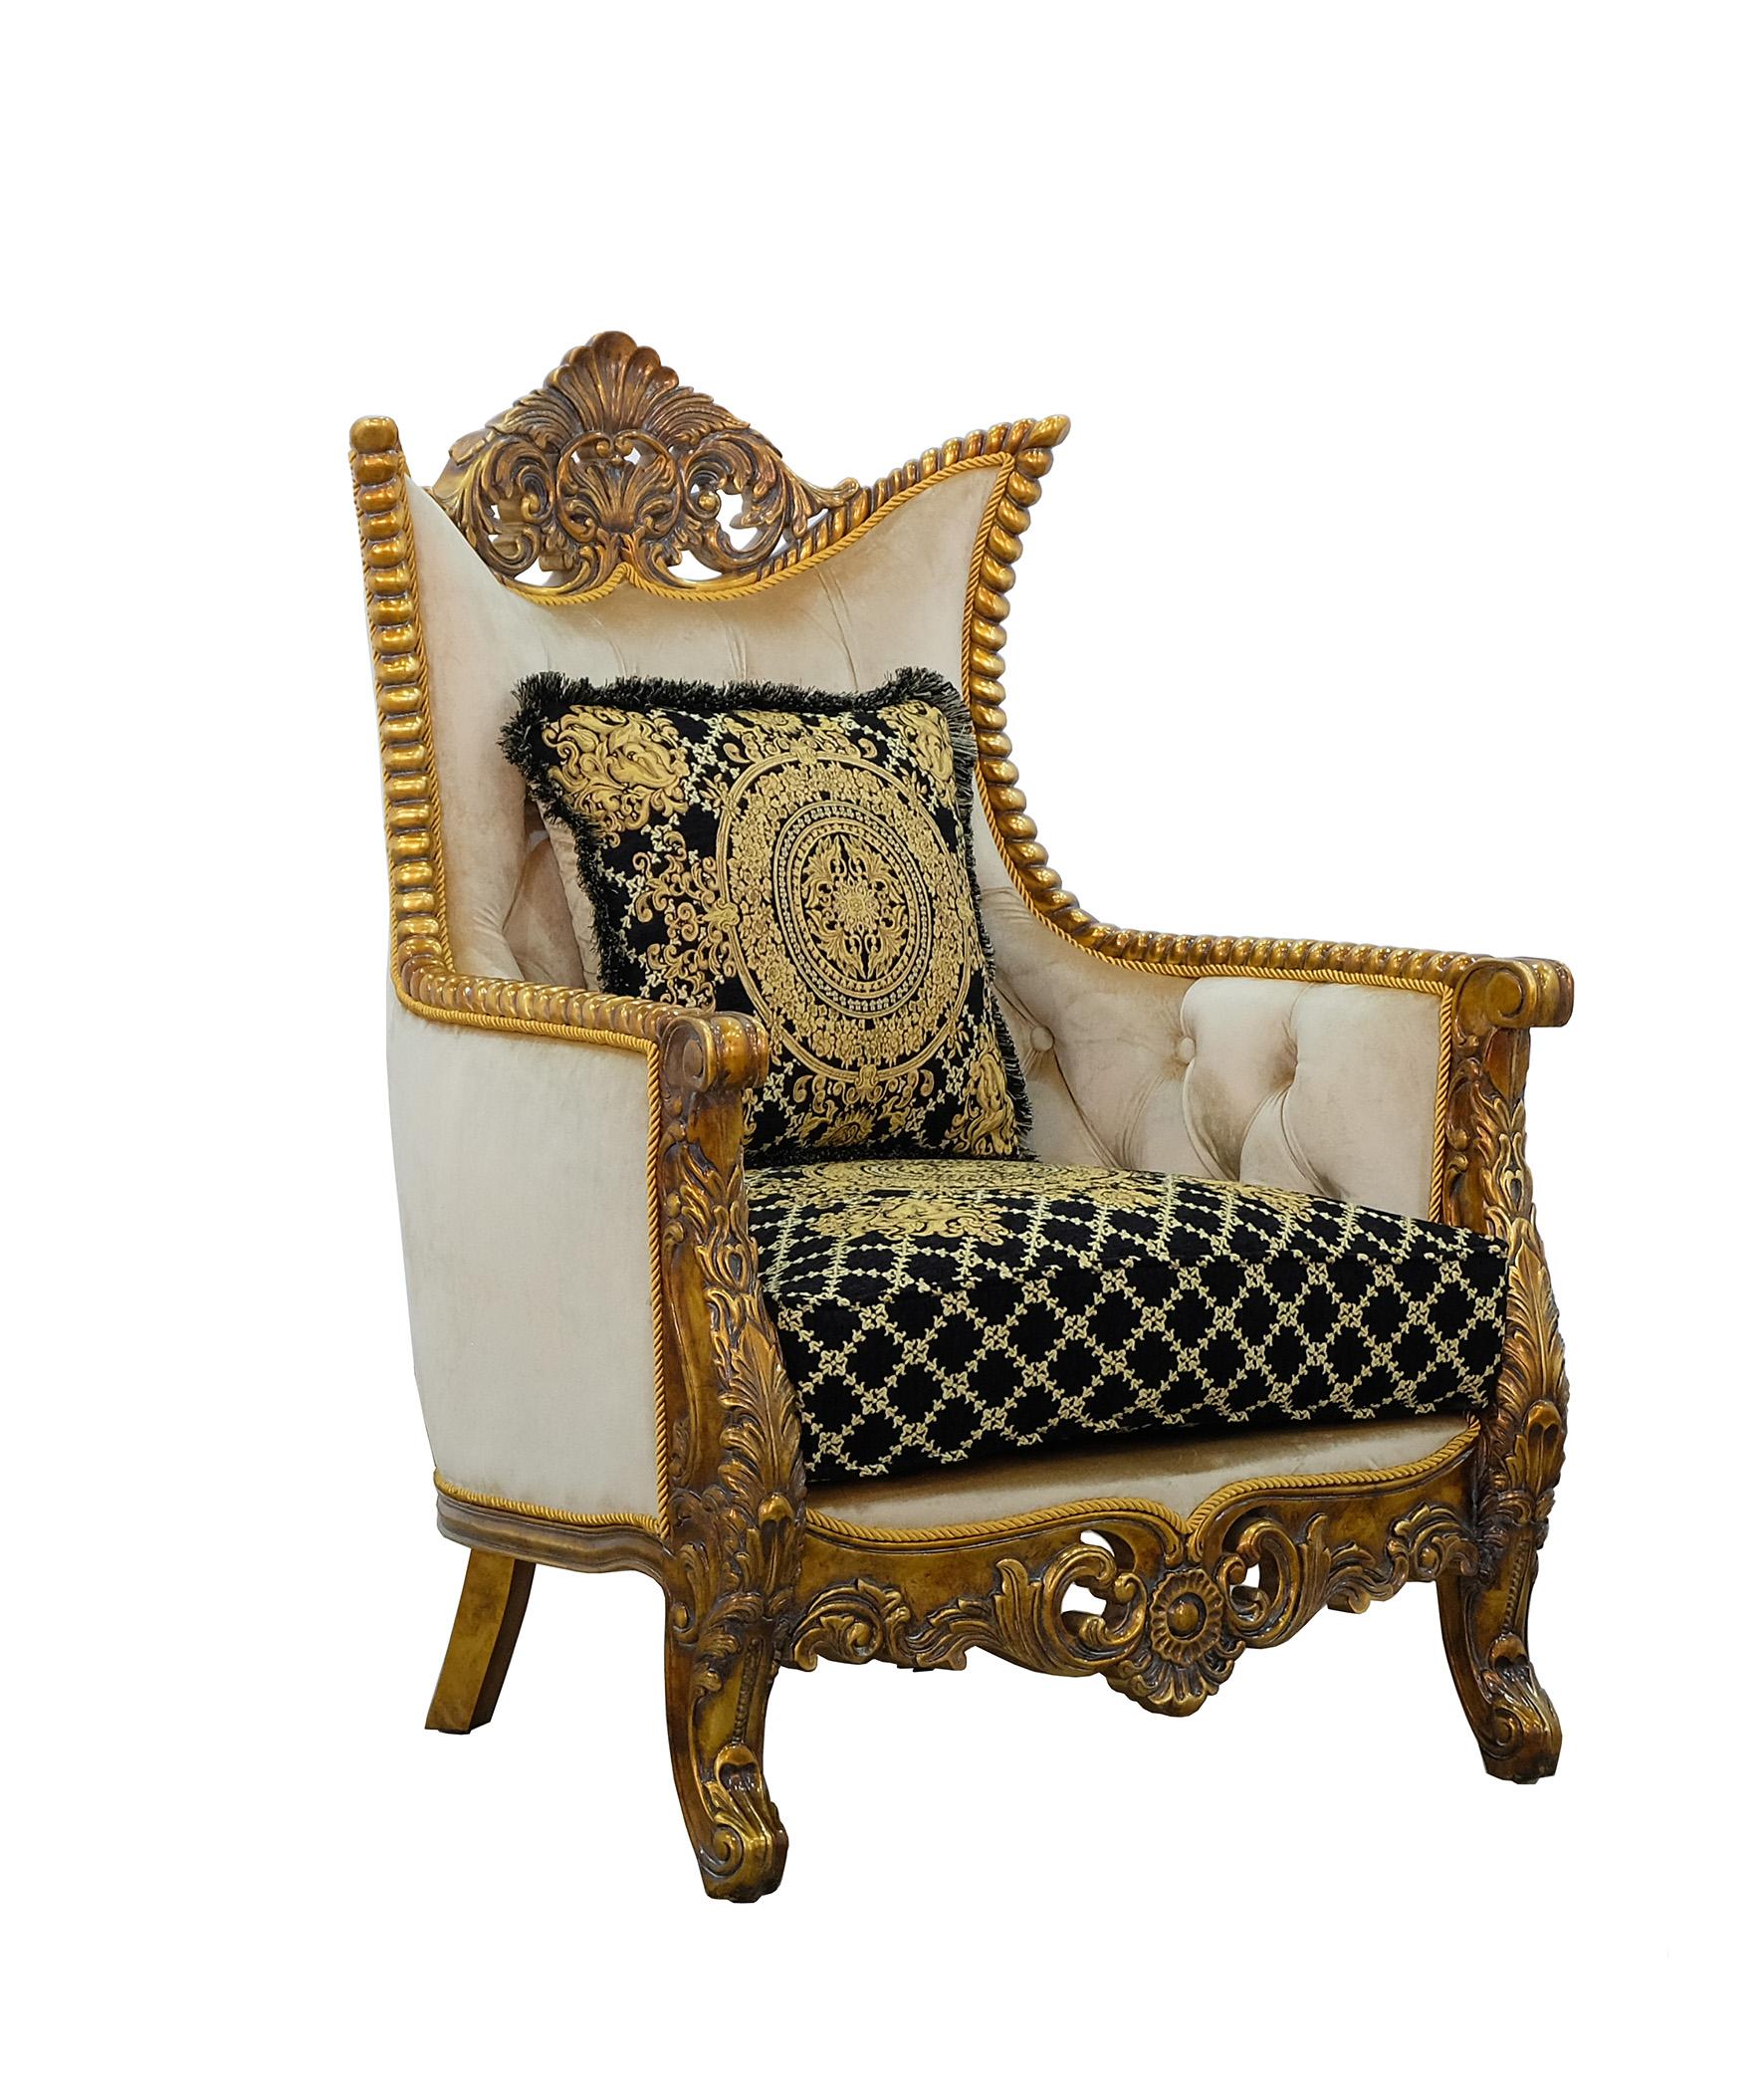 Classic, Traditional Arm Chair MAGGIOLINI 31059-C in Antique, Gold, Black, Beige Fabric